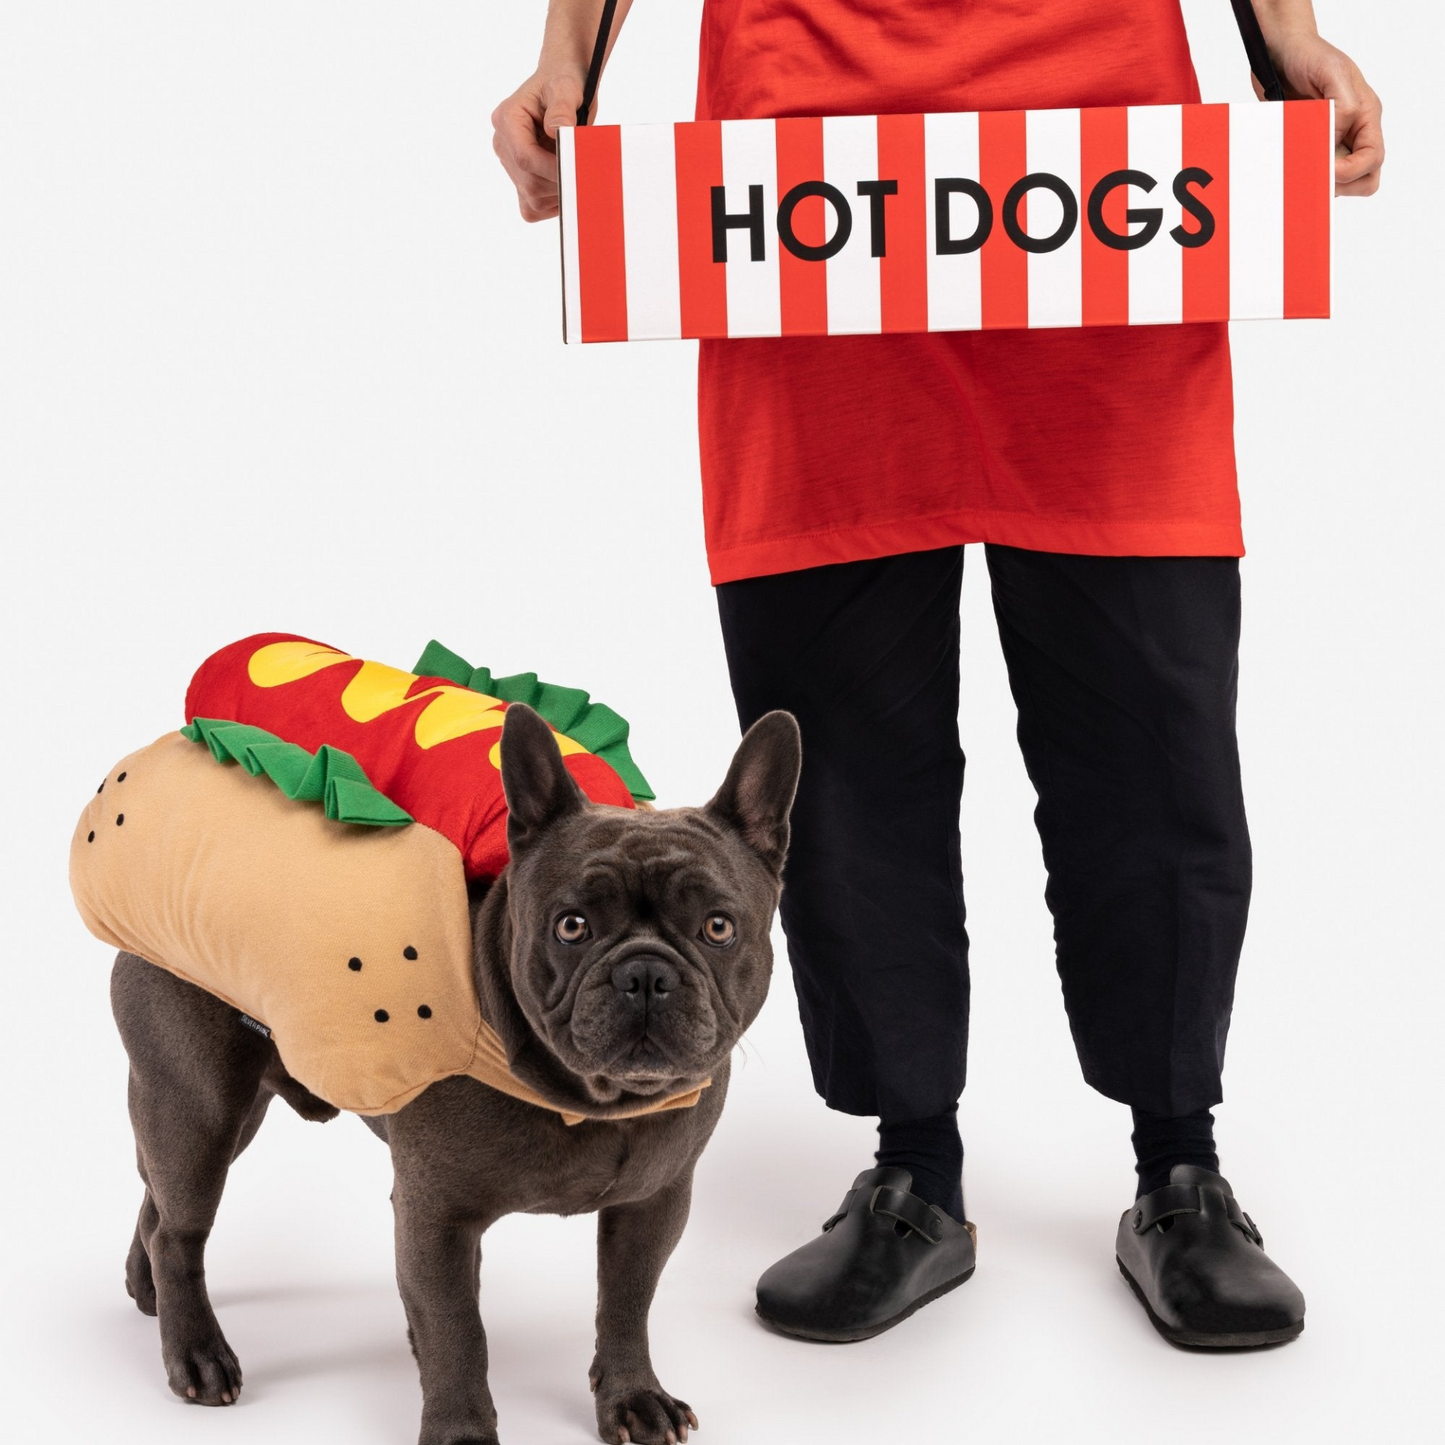 Hotdog Vendor - Matching Human & Dog  Costume